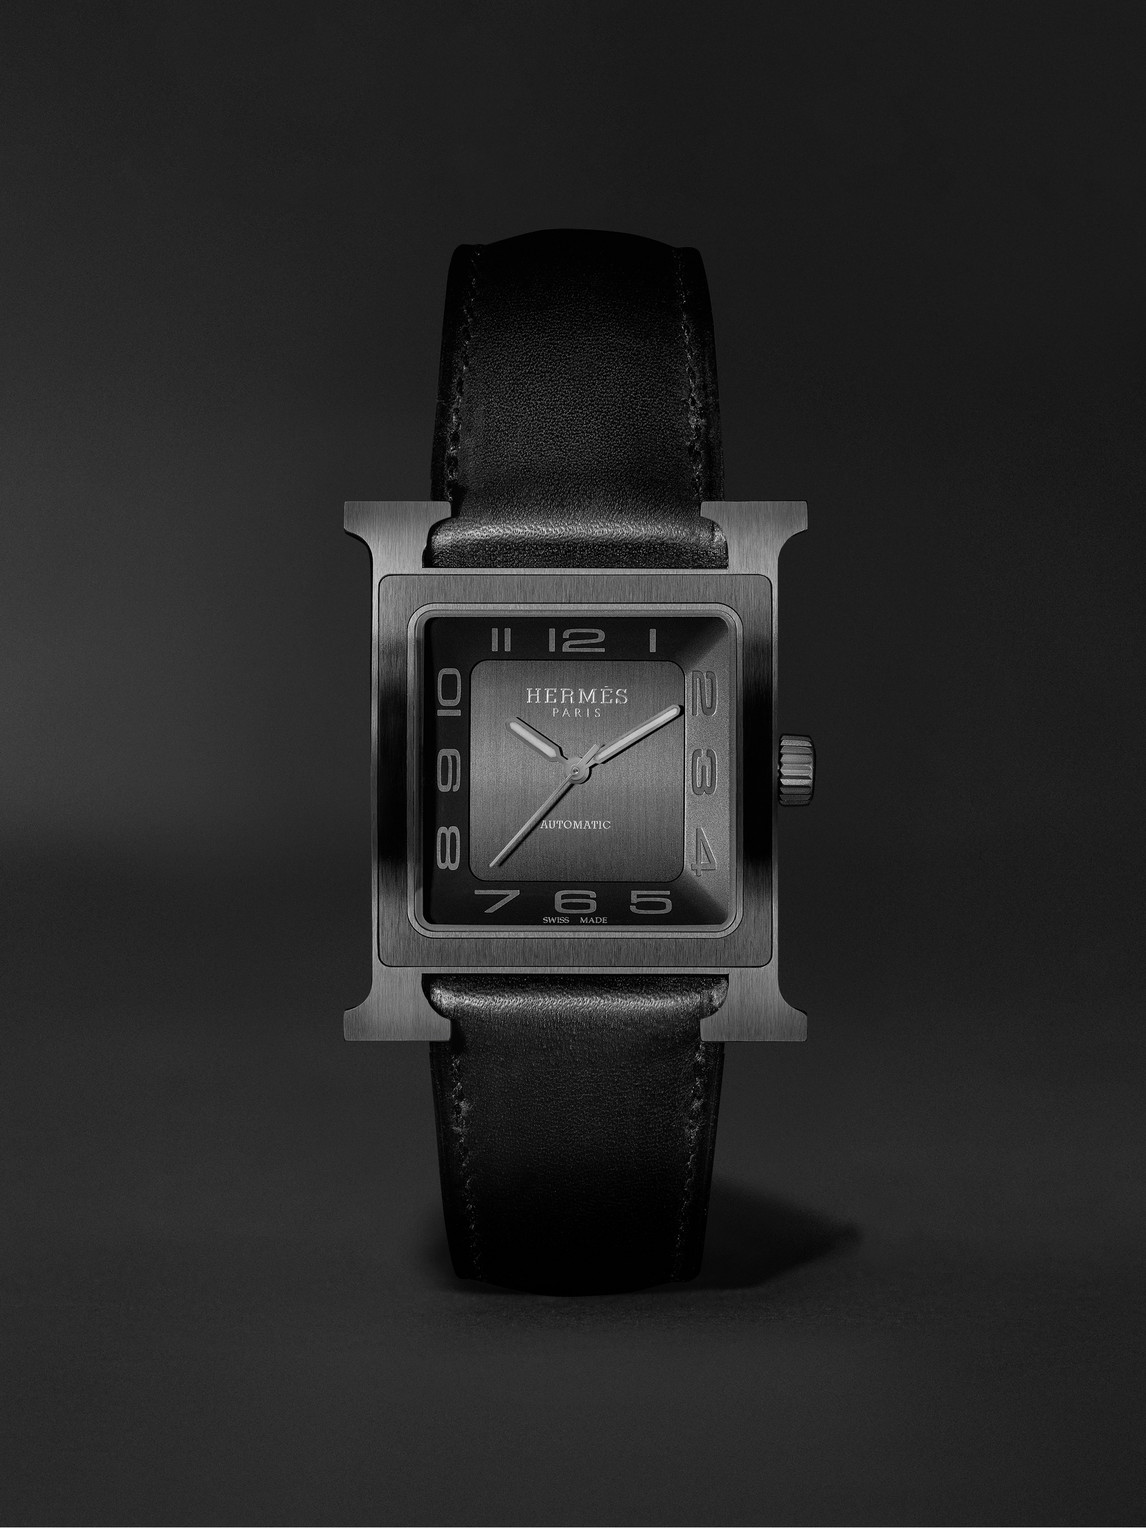 Hermès Timepieces Heure H Automatic 34mm Titanium Watch, Ref. No. W054131ww00 In Black